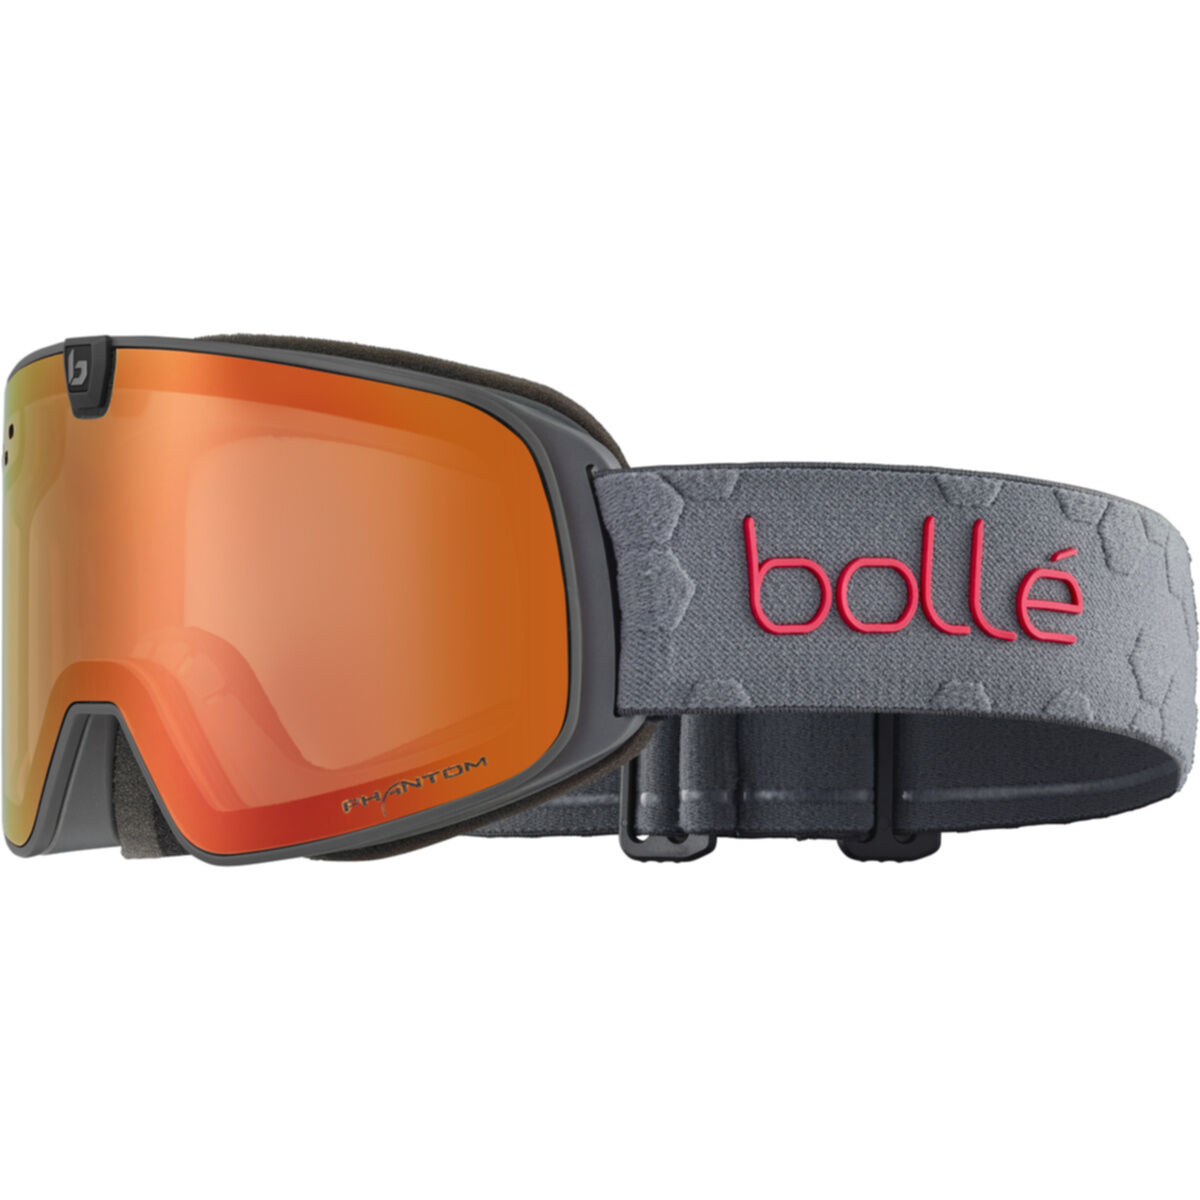 Accessoires Zonnebrillen & Eyewear Sportbrillen Dirtbike goggle bag snowboard goggle bag Coors goggle case drawstring bag 